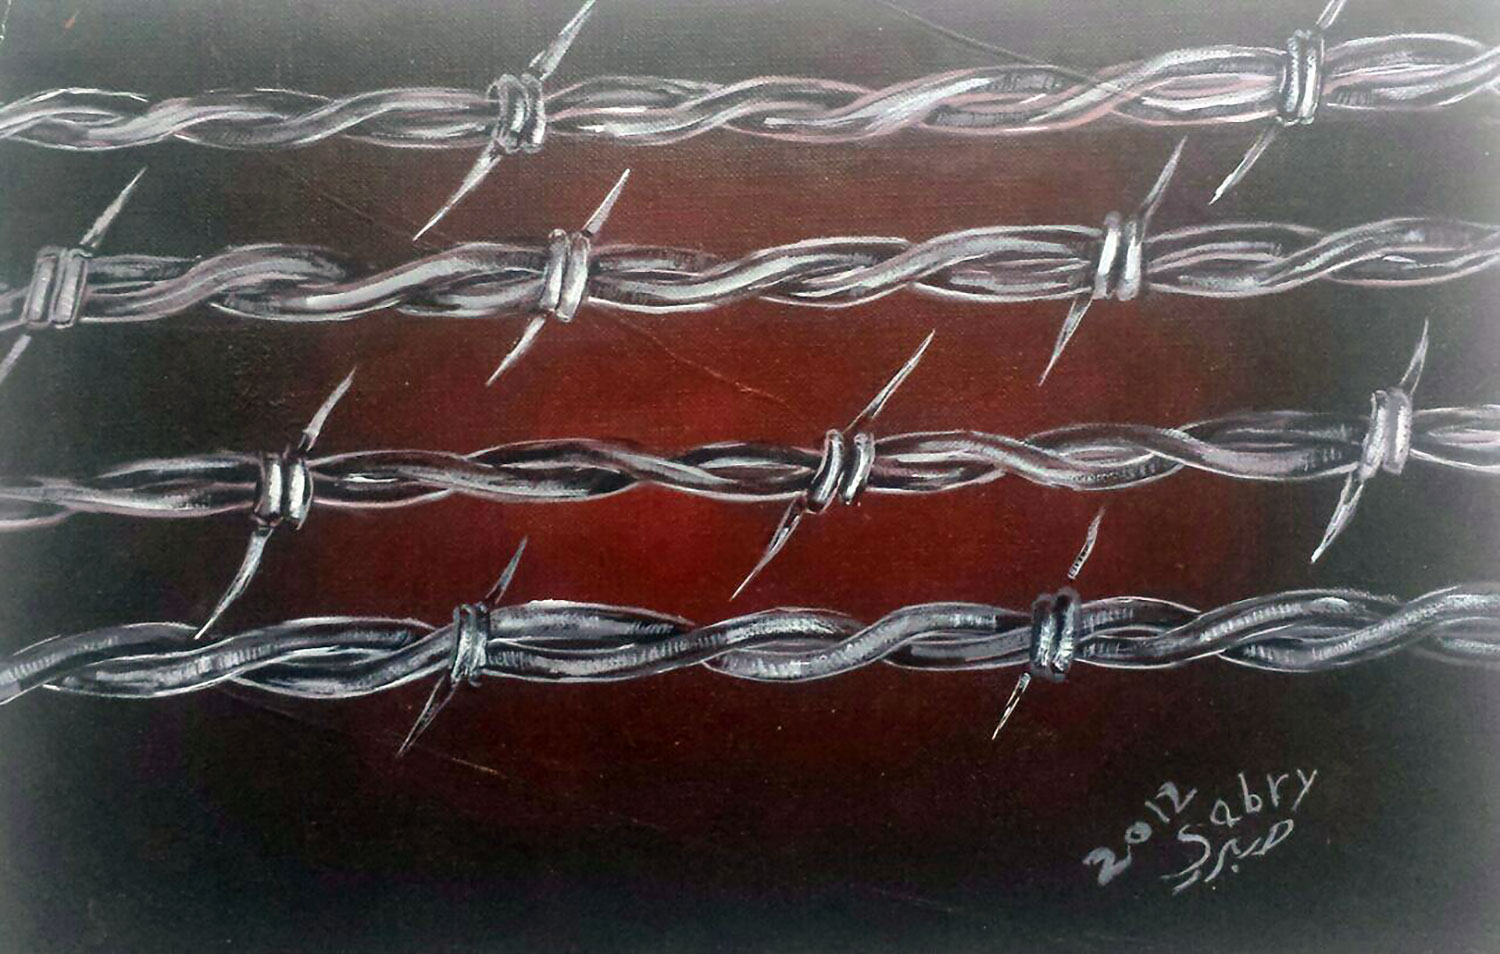 Justseeds | Free Captive Art from Guantánamo